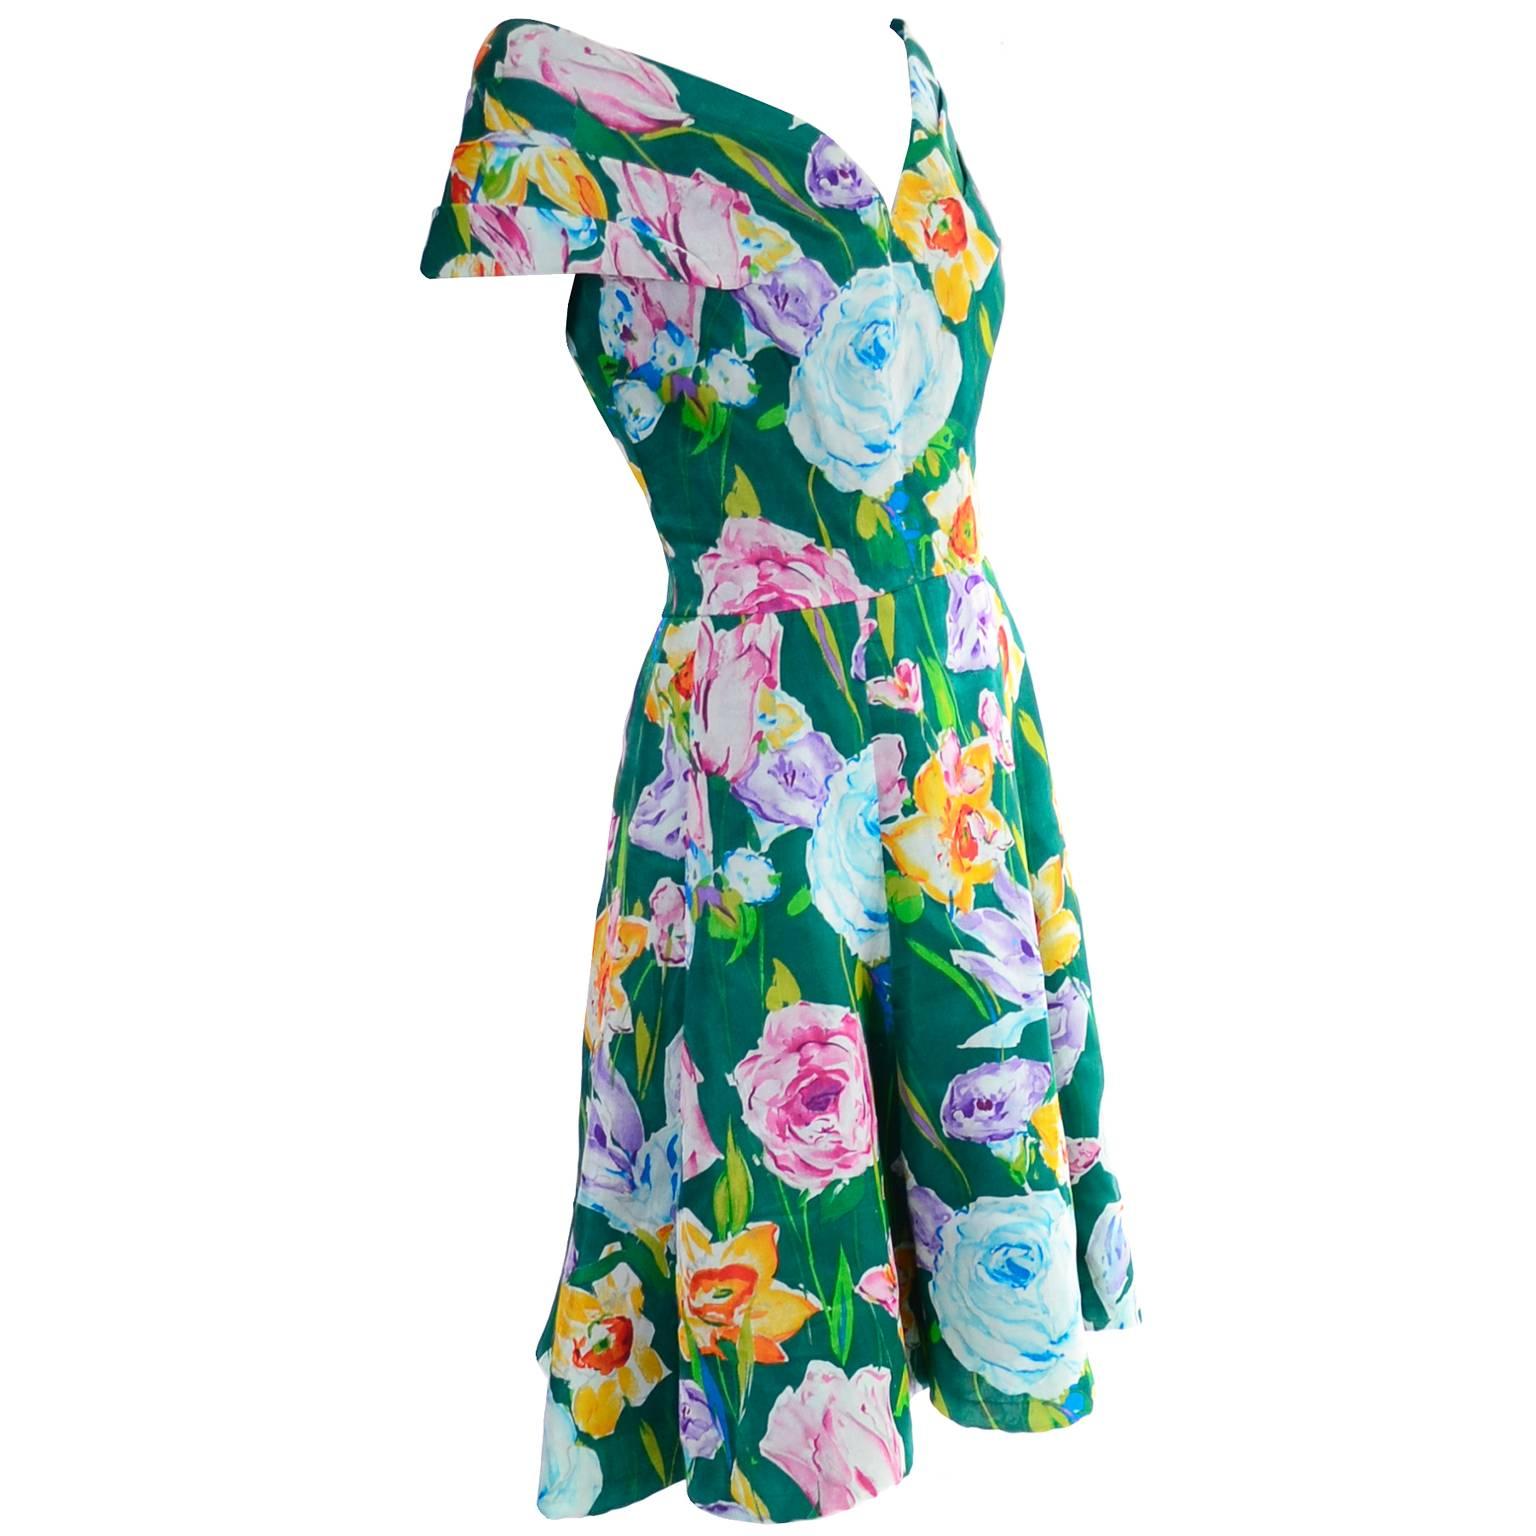 Gray Arnold Scaasi Vintage Dress Off Shoulder Floral Organza over Green silk  For Sale